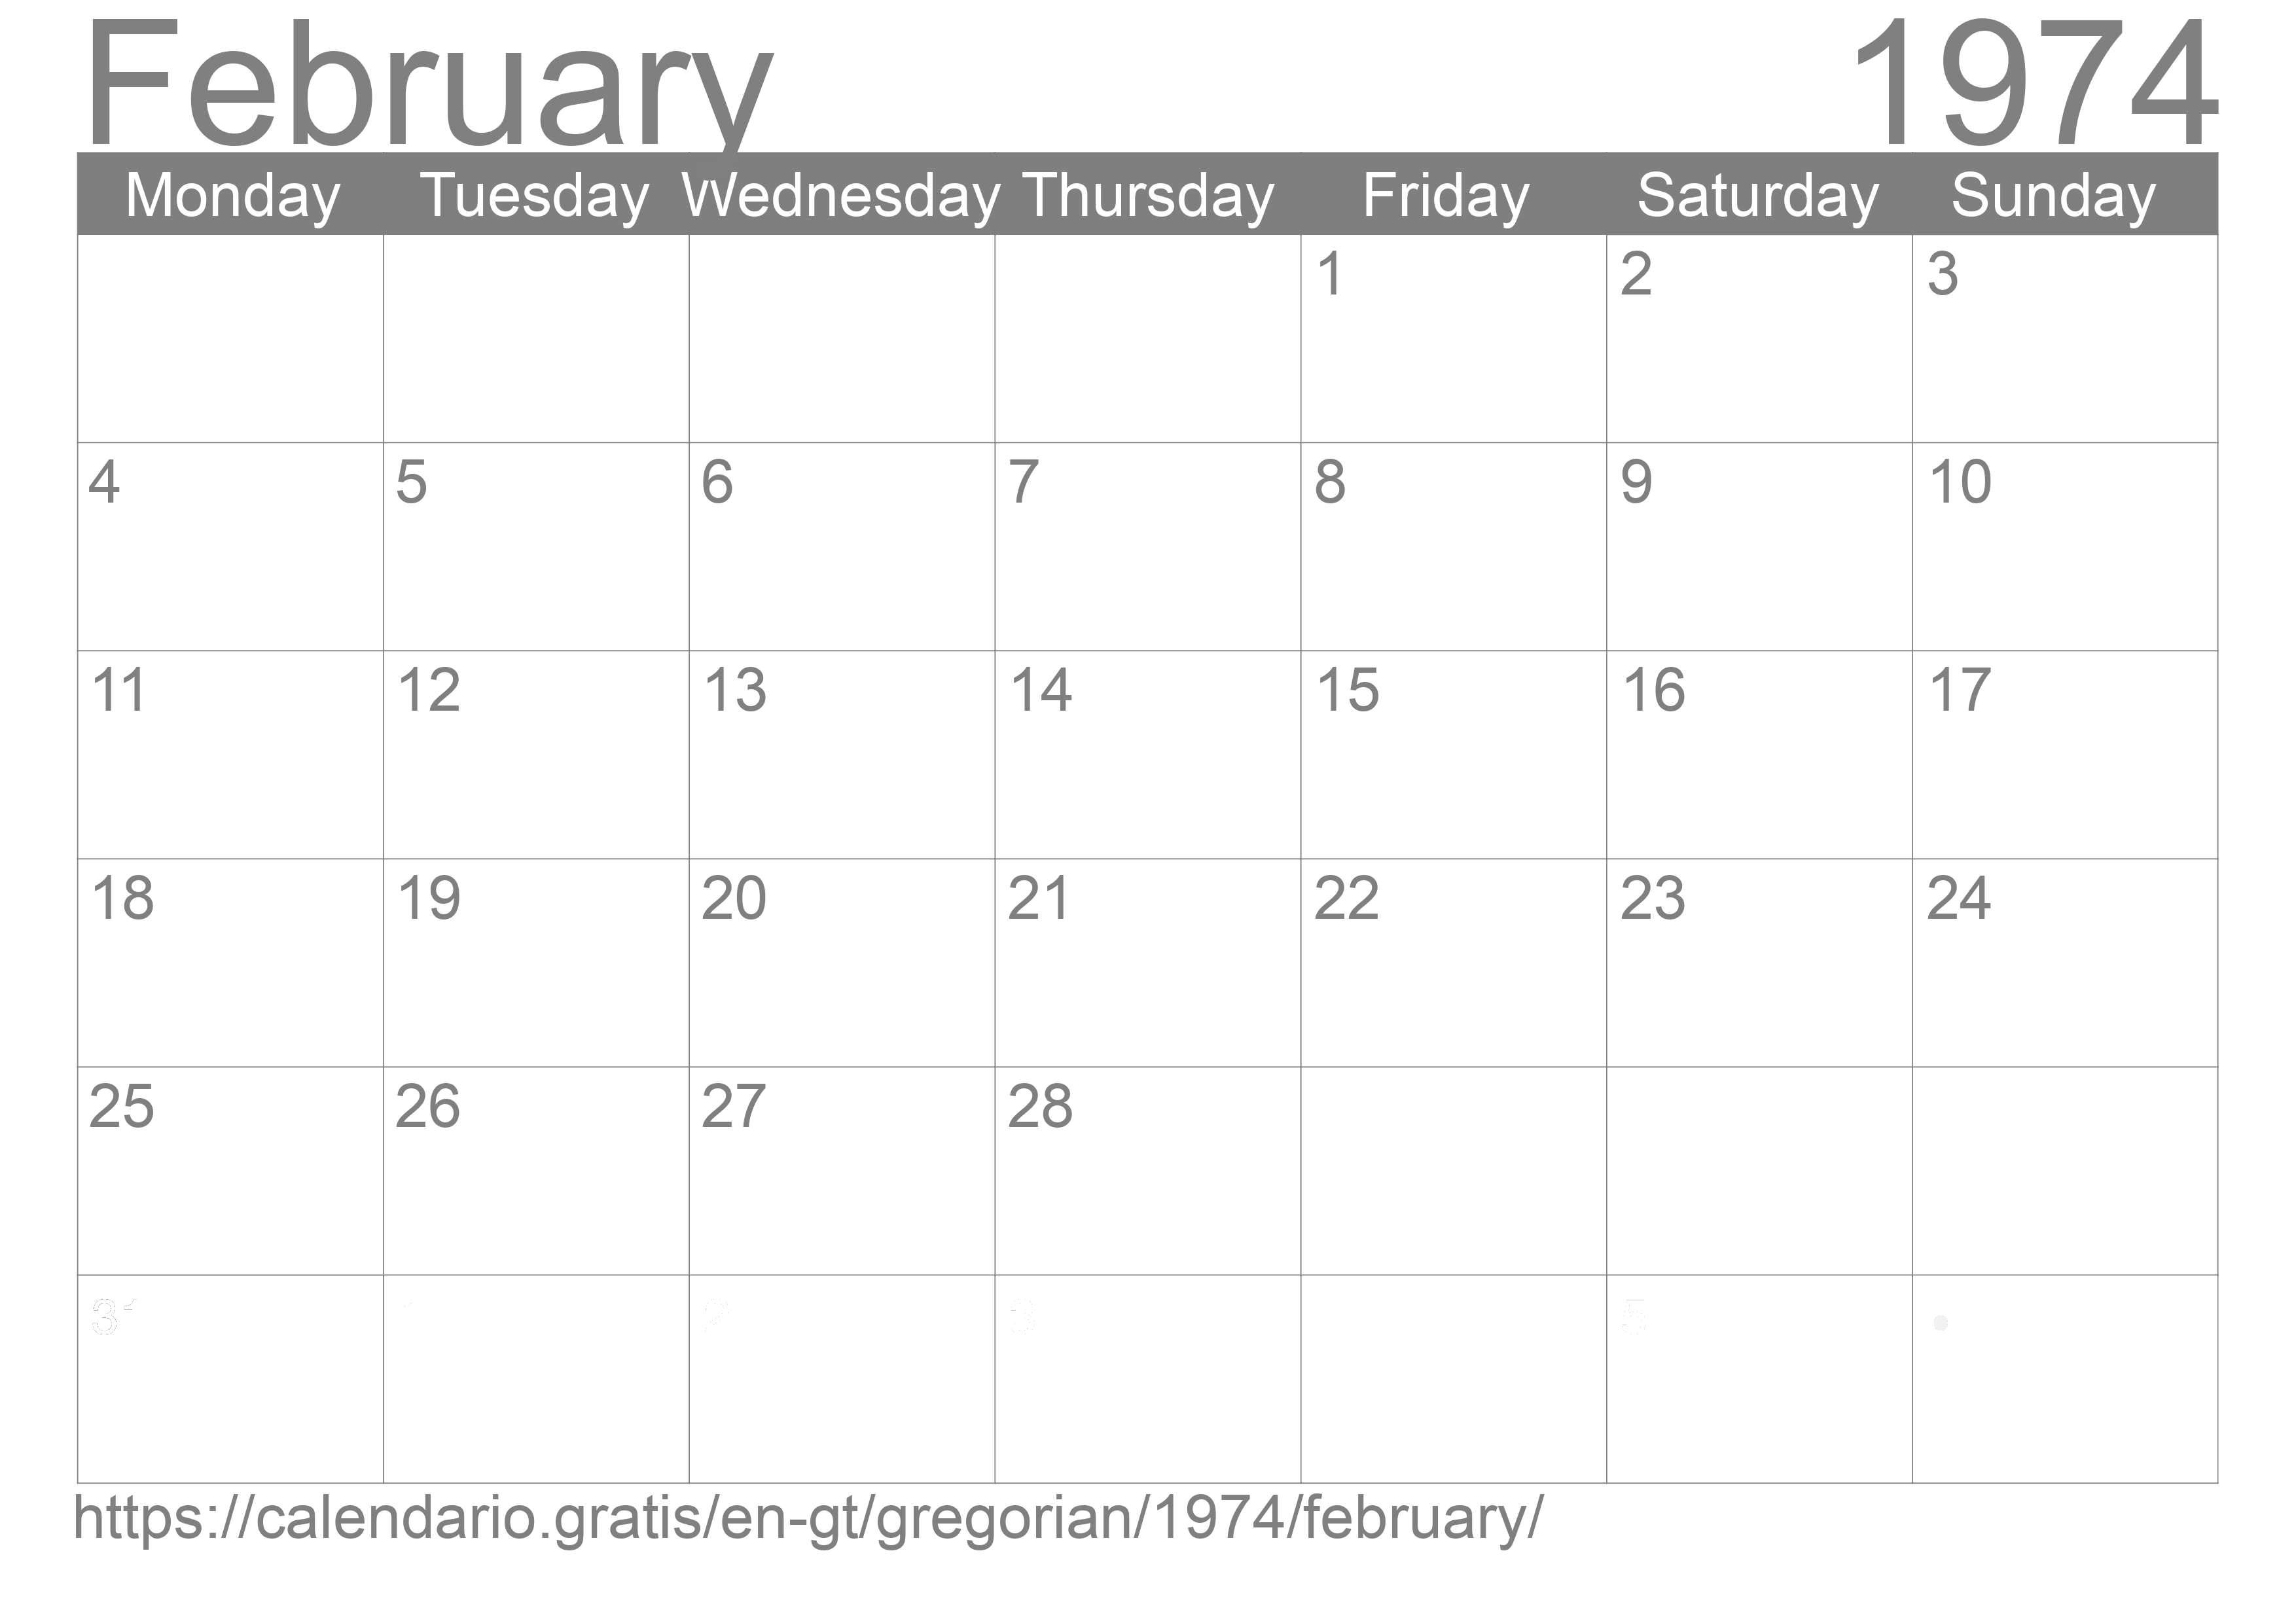 Calendar February 1974 to print